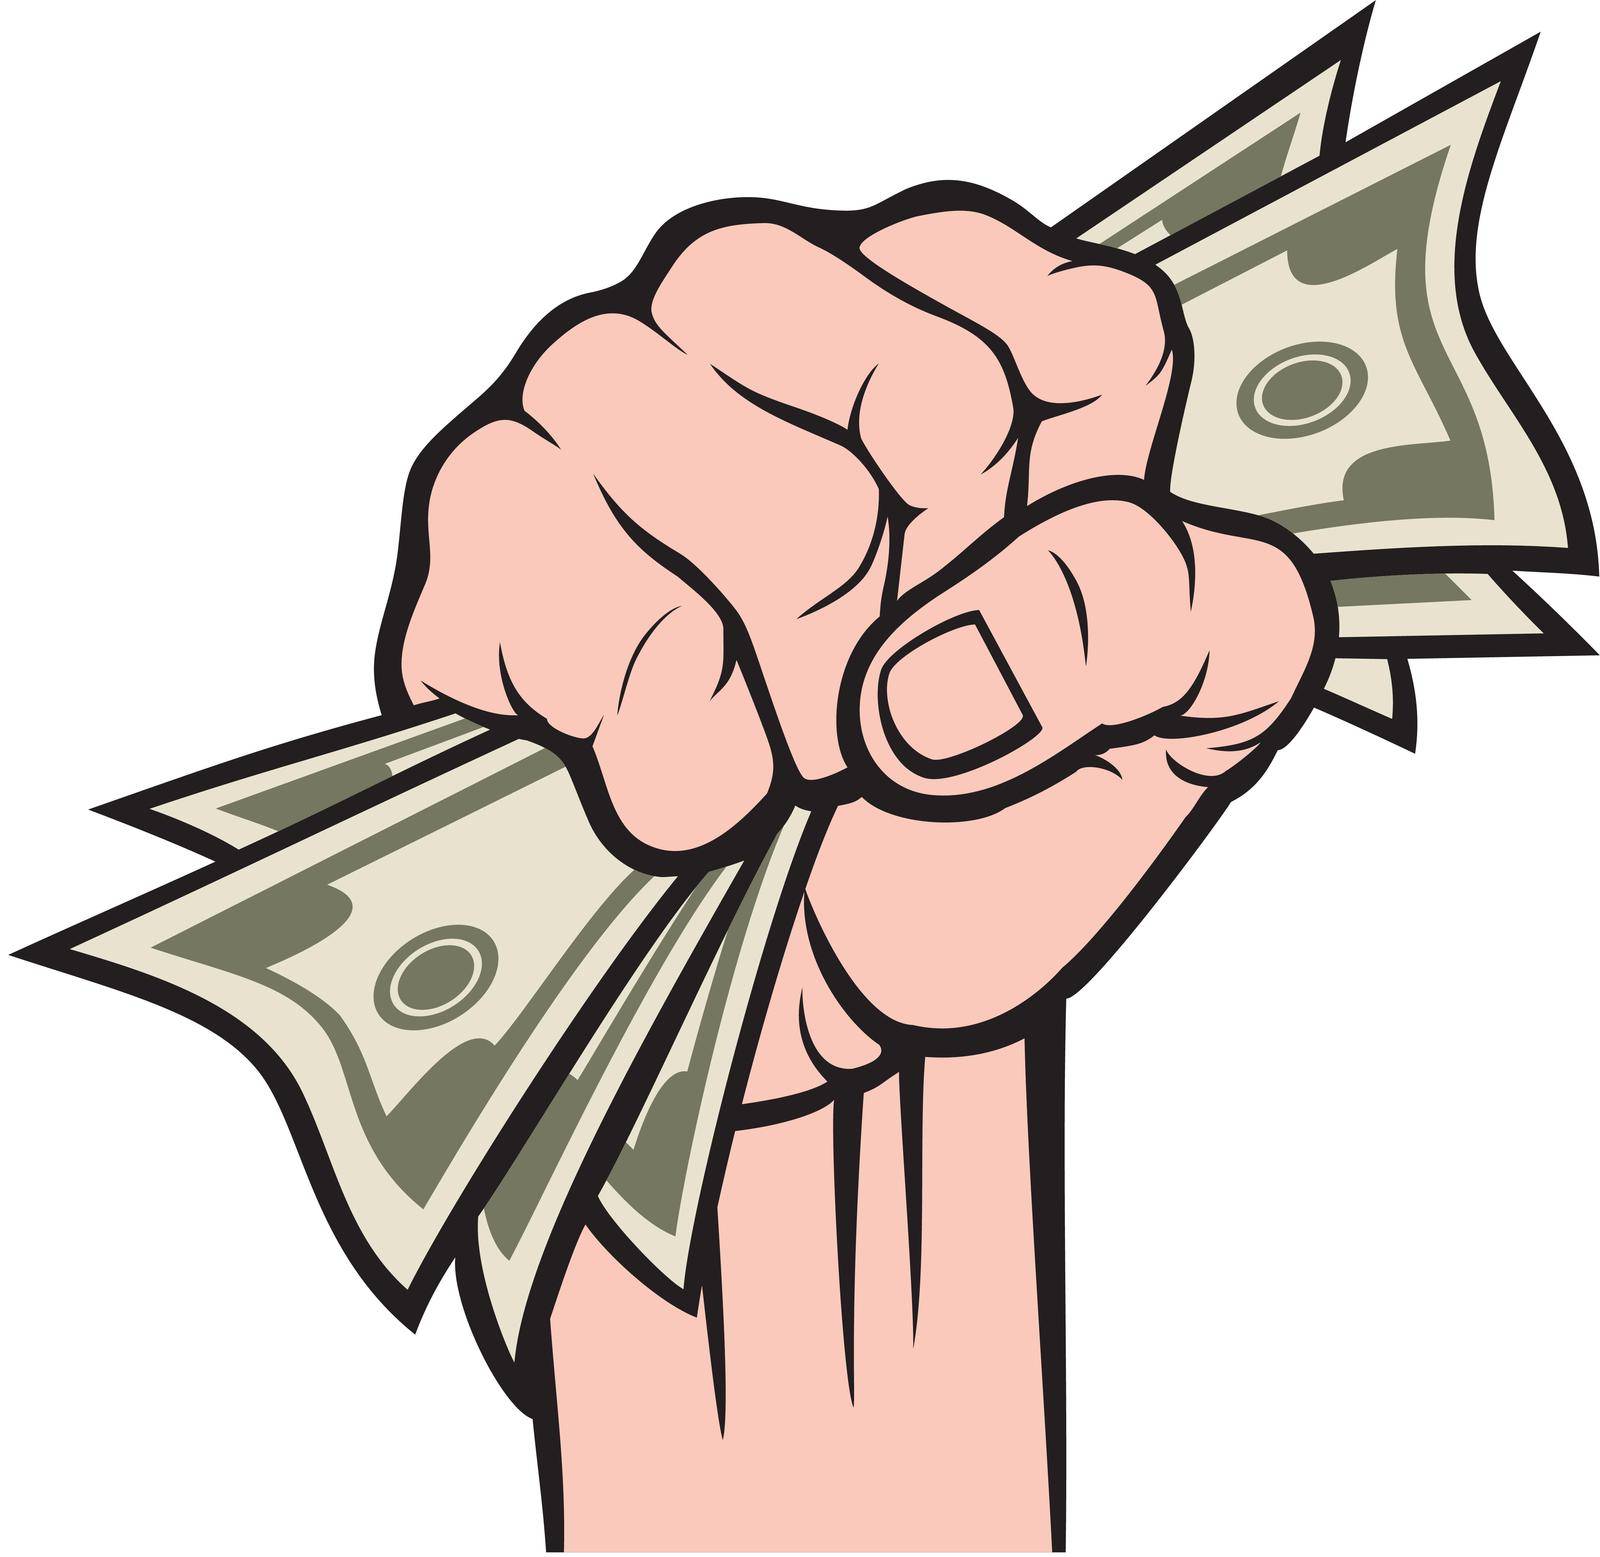 Money in hand vector illustration